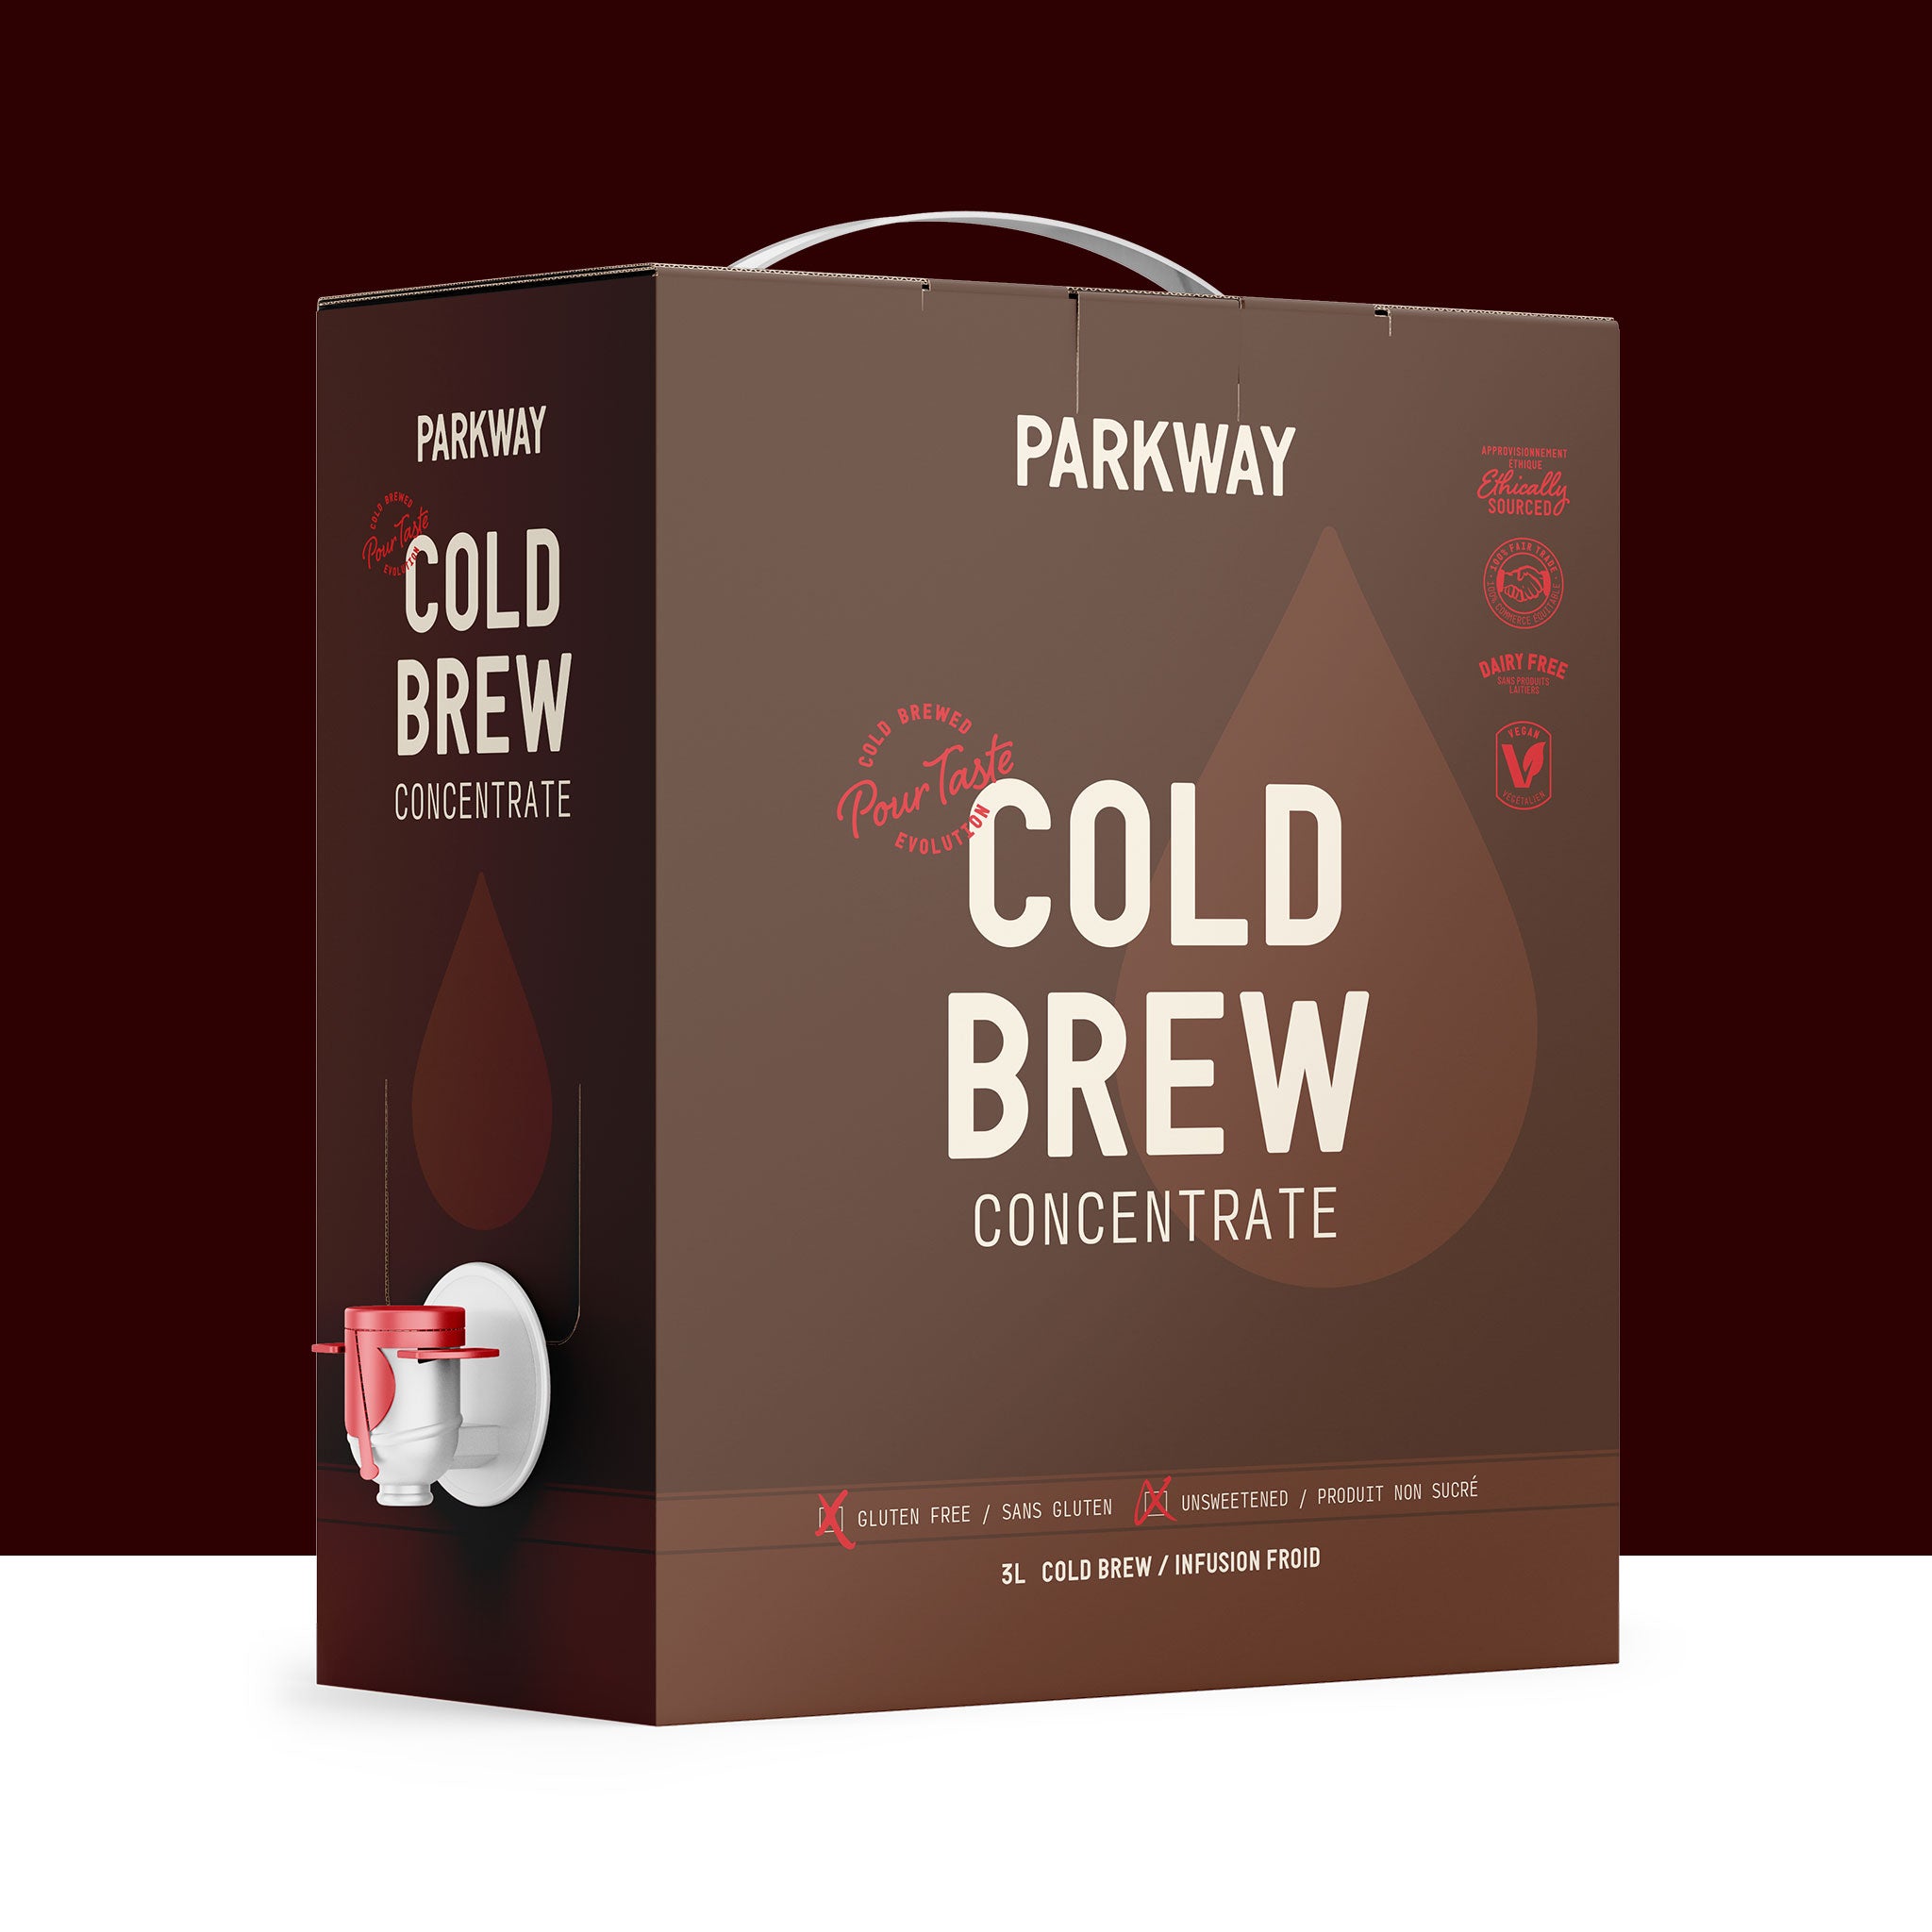 Cold Brew Bag-in-box